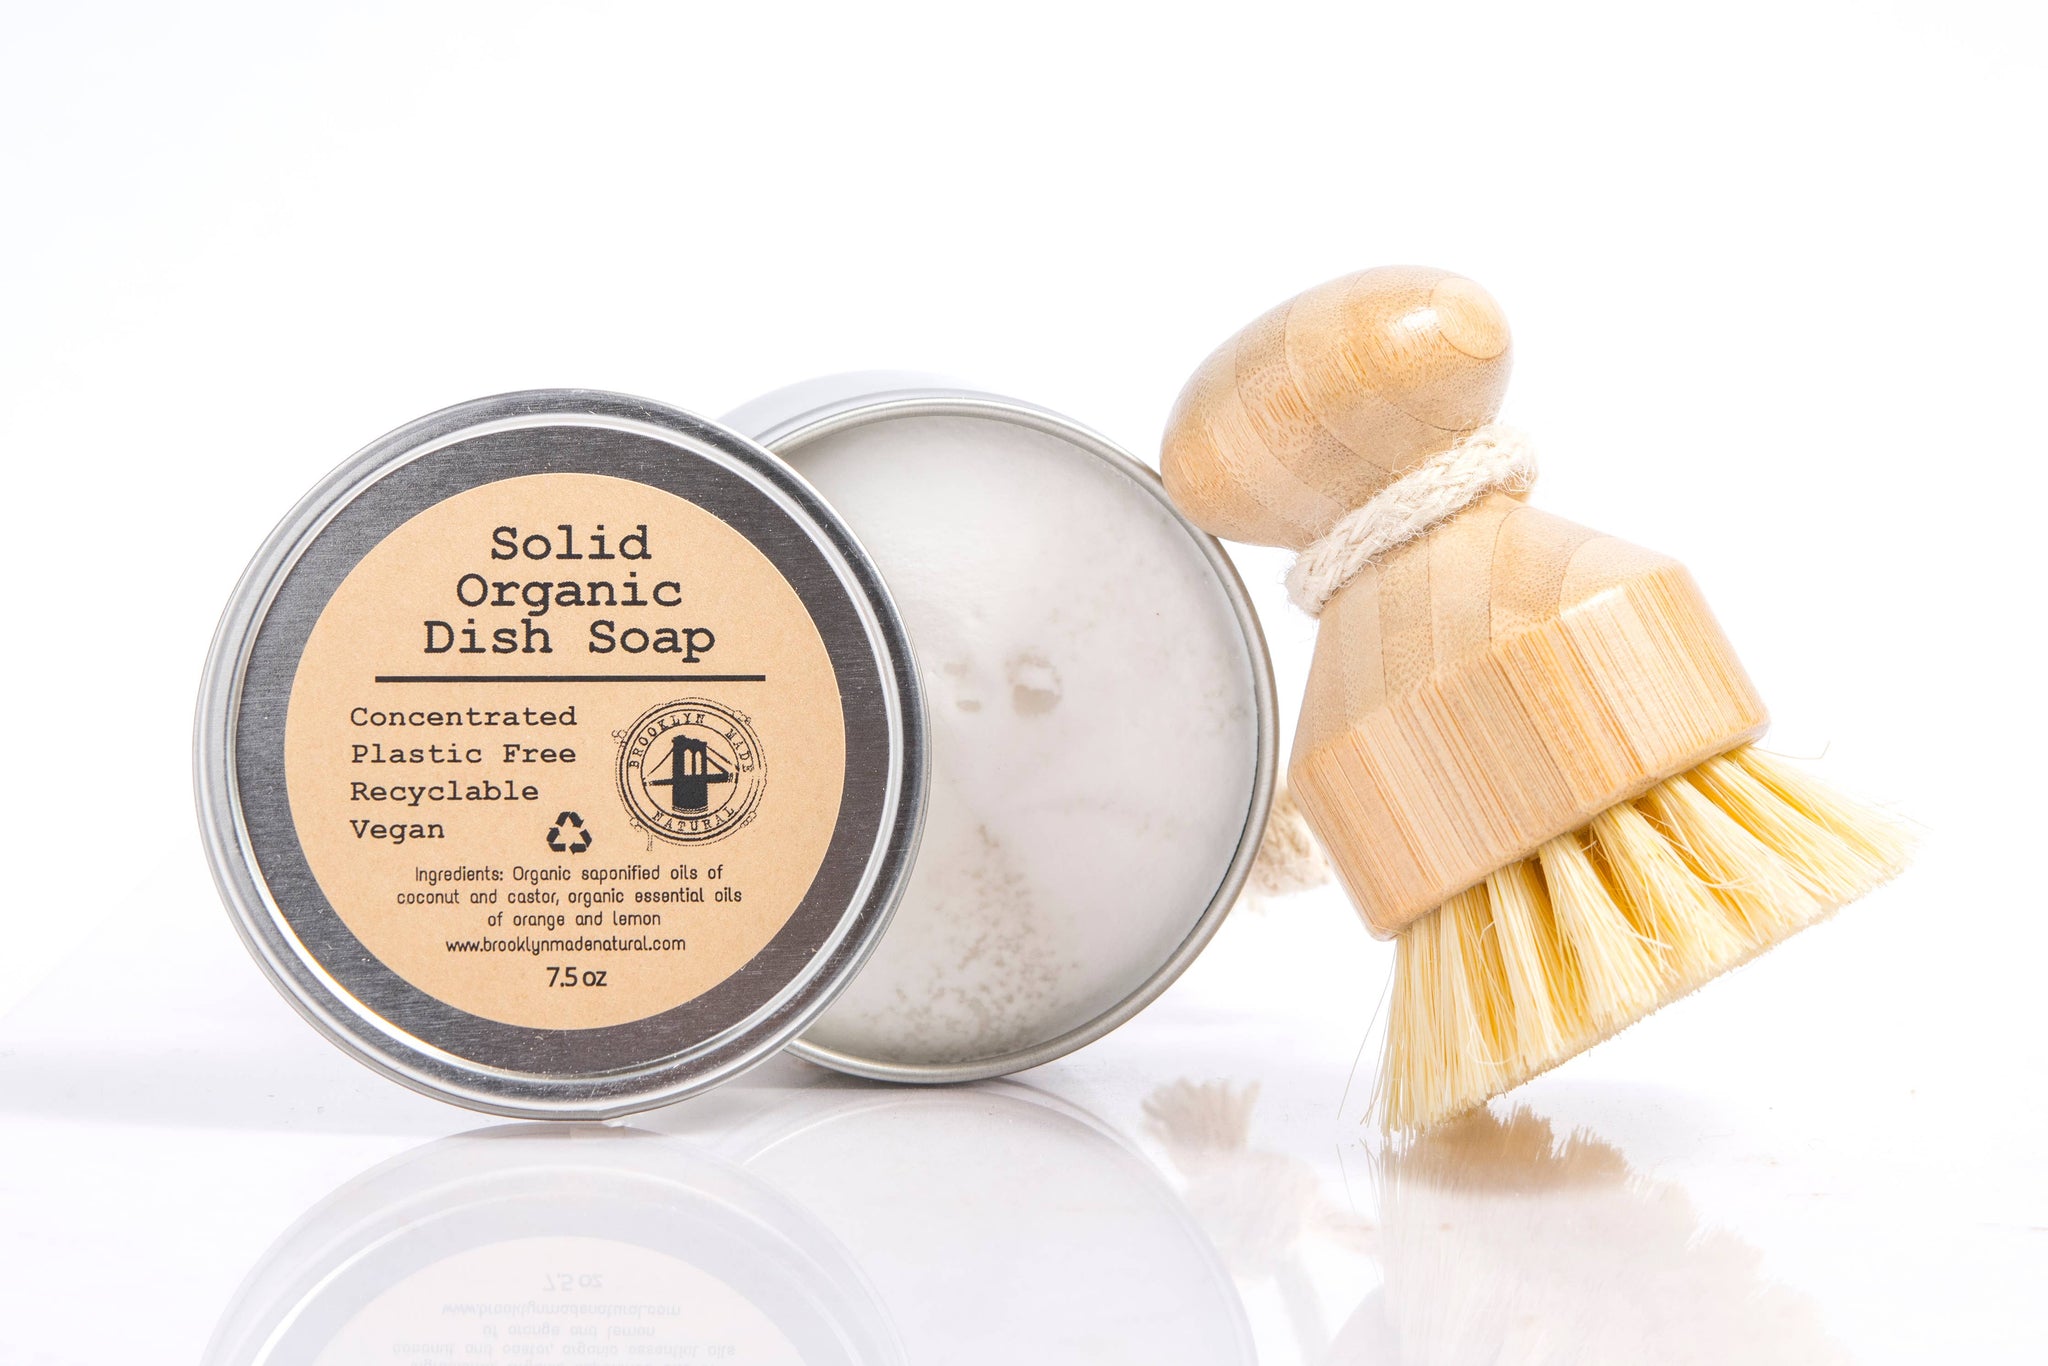 Solid Dish Soap - Plastic Free, Vegan, Zero Waste